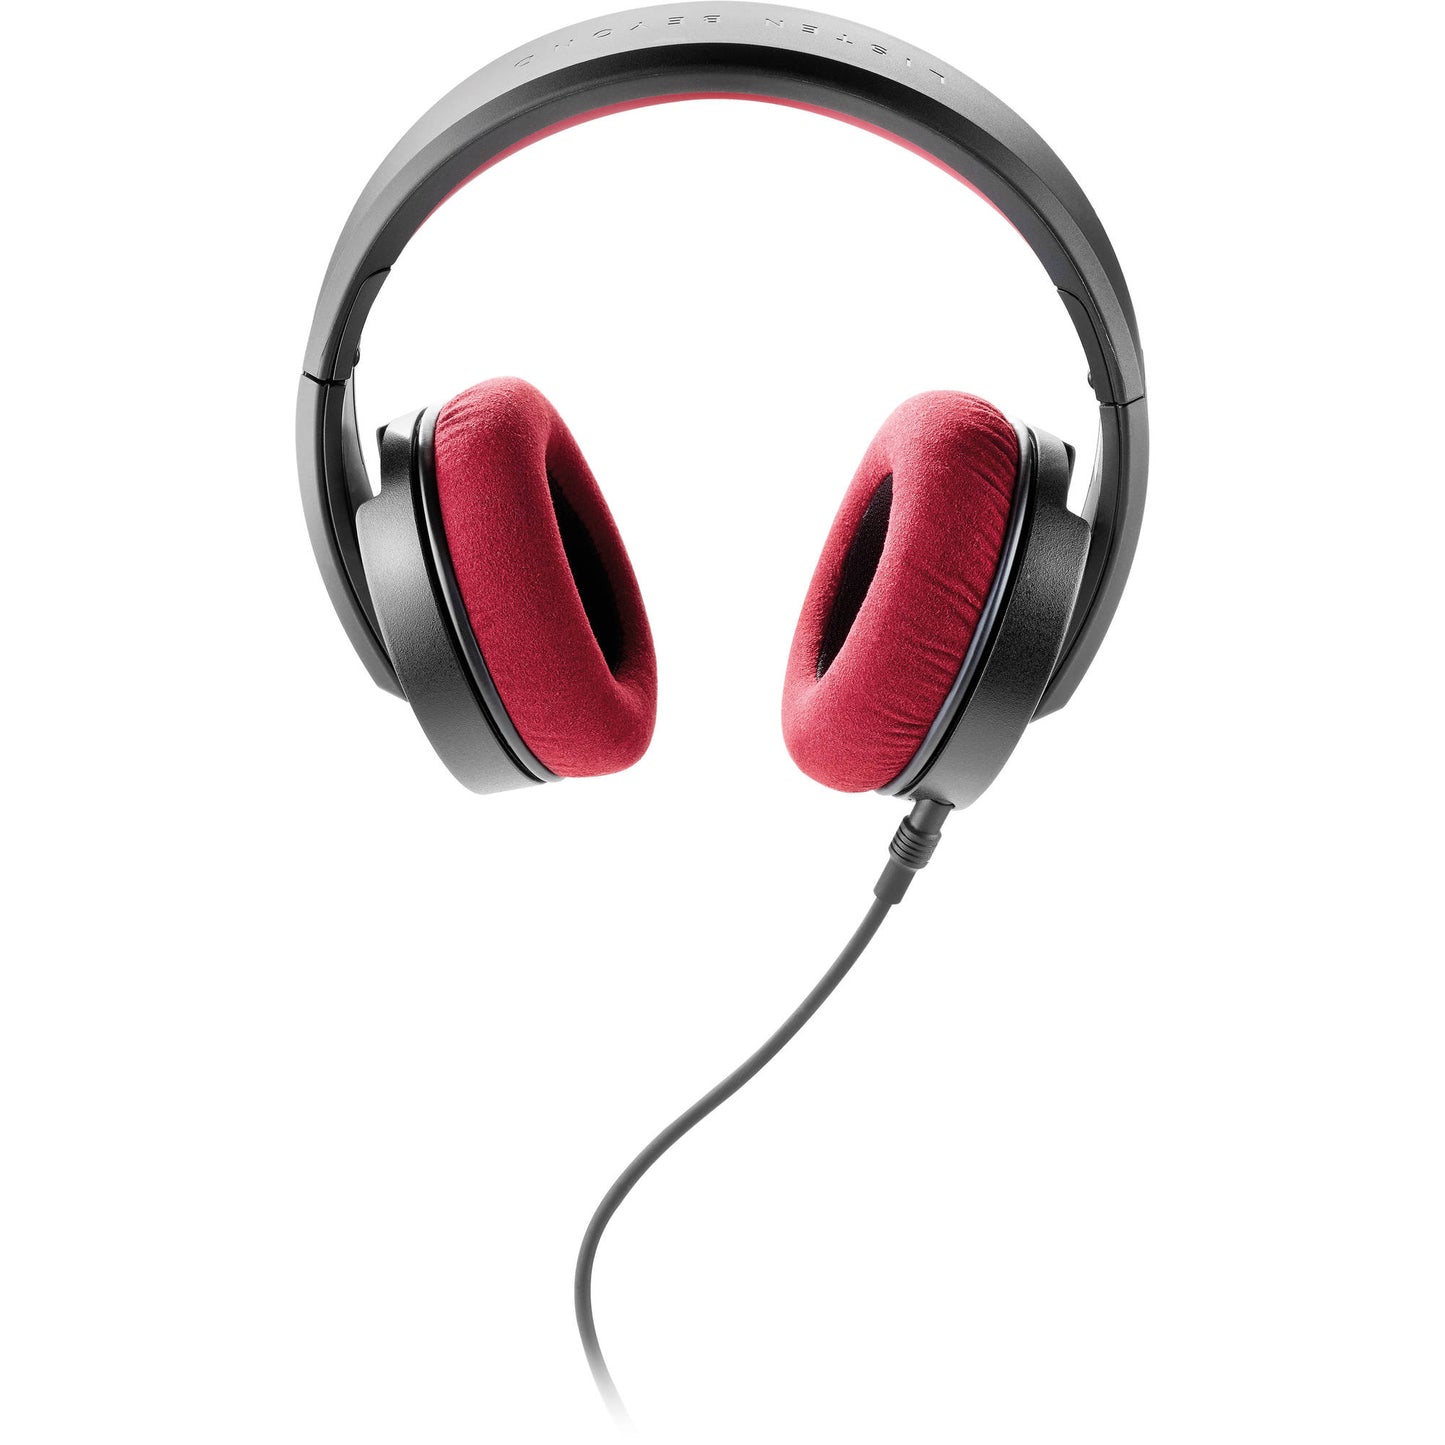 Focal Listen Pro Closed-Back Studio Monitor Headphones